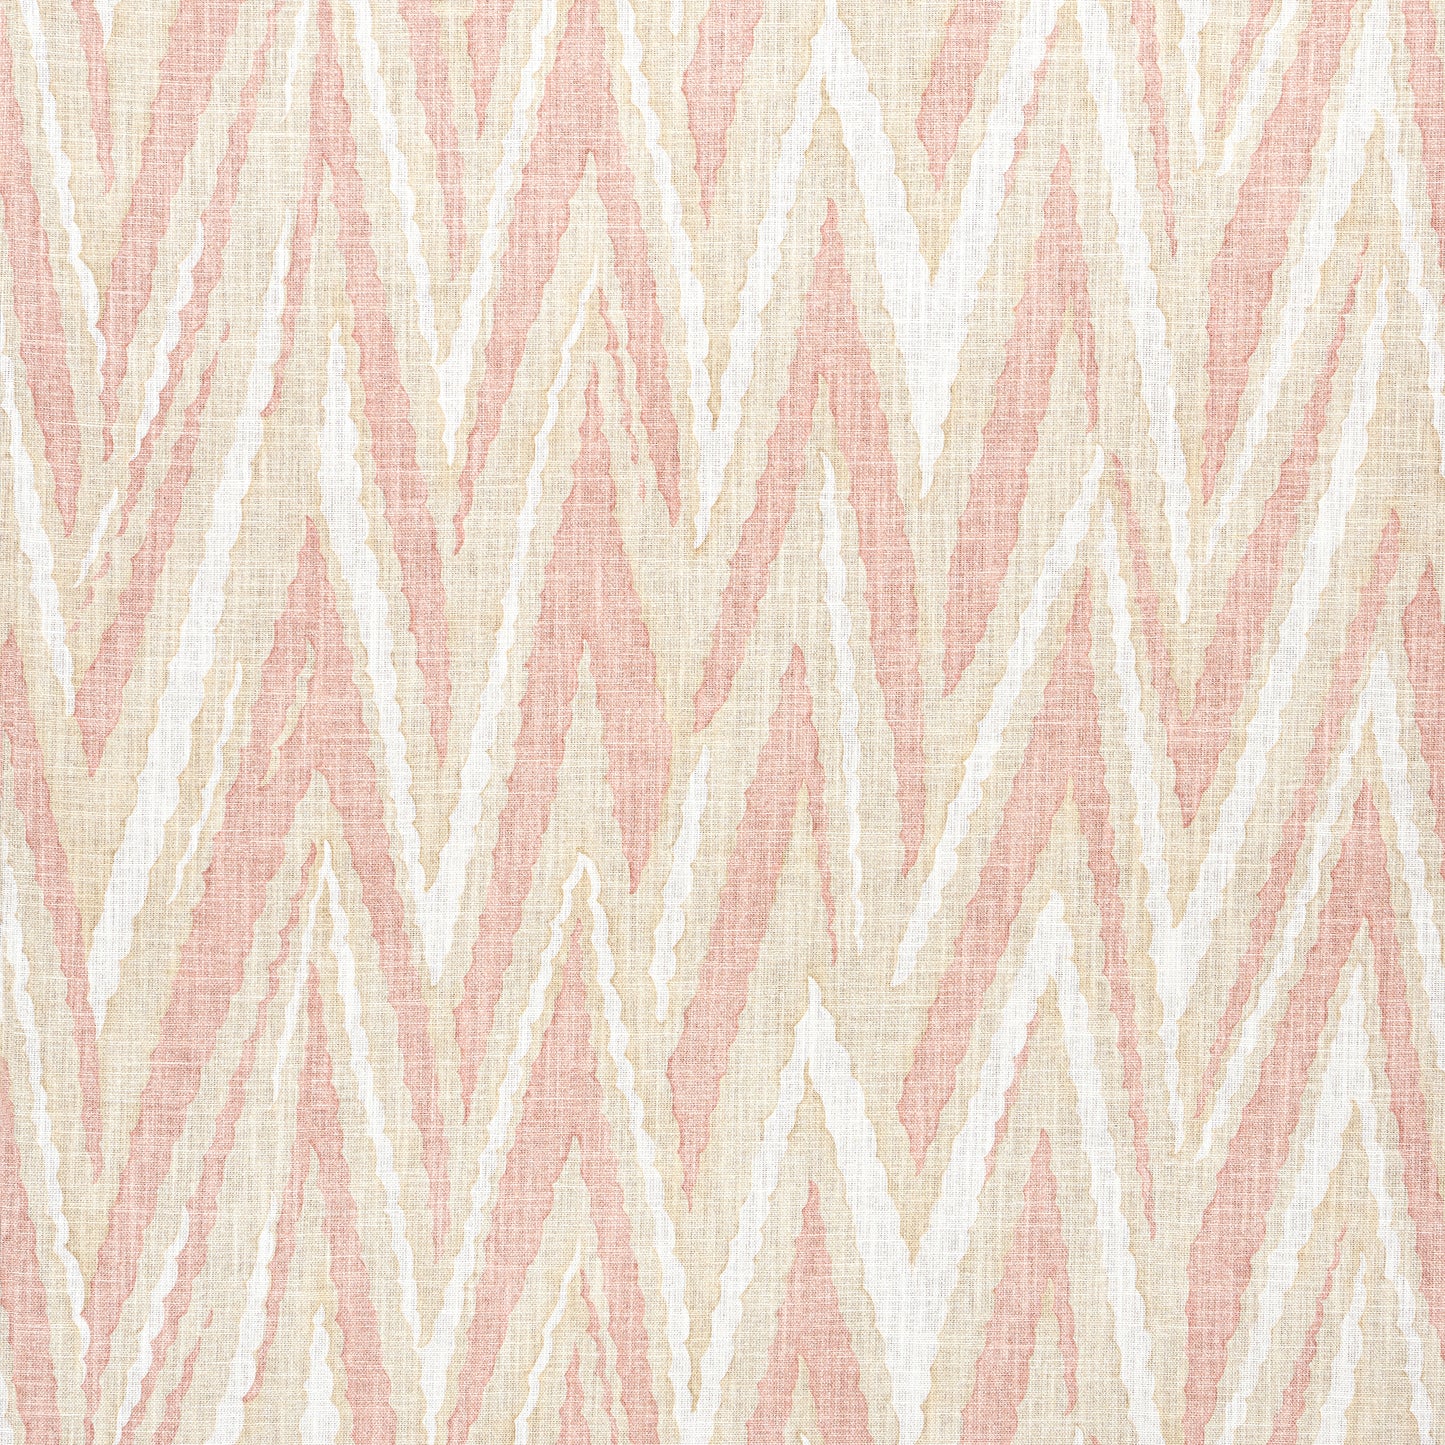 Purchase  Ann French Fabric SKU# AF23142  pattern name  Highland Peak